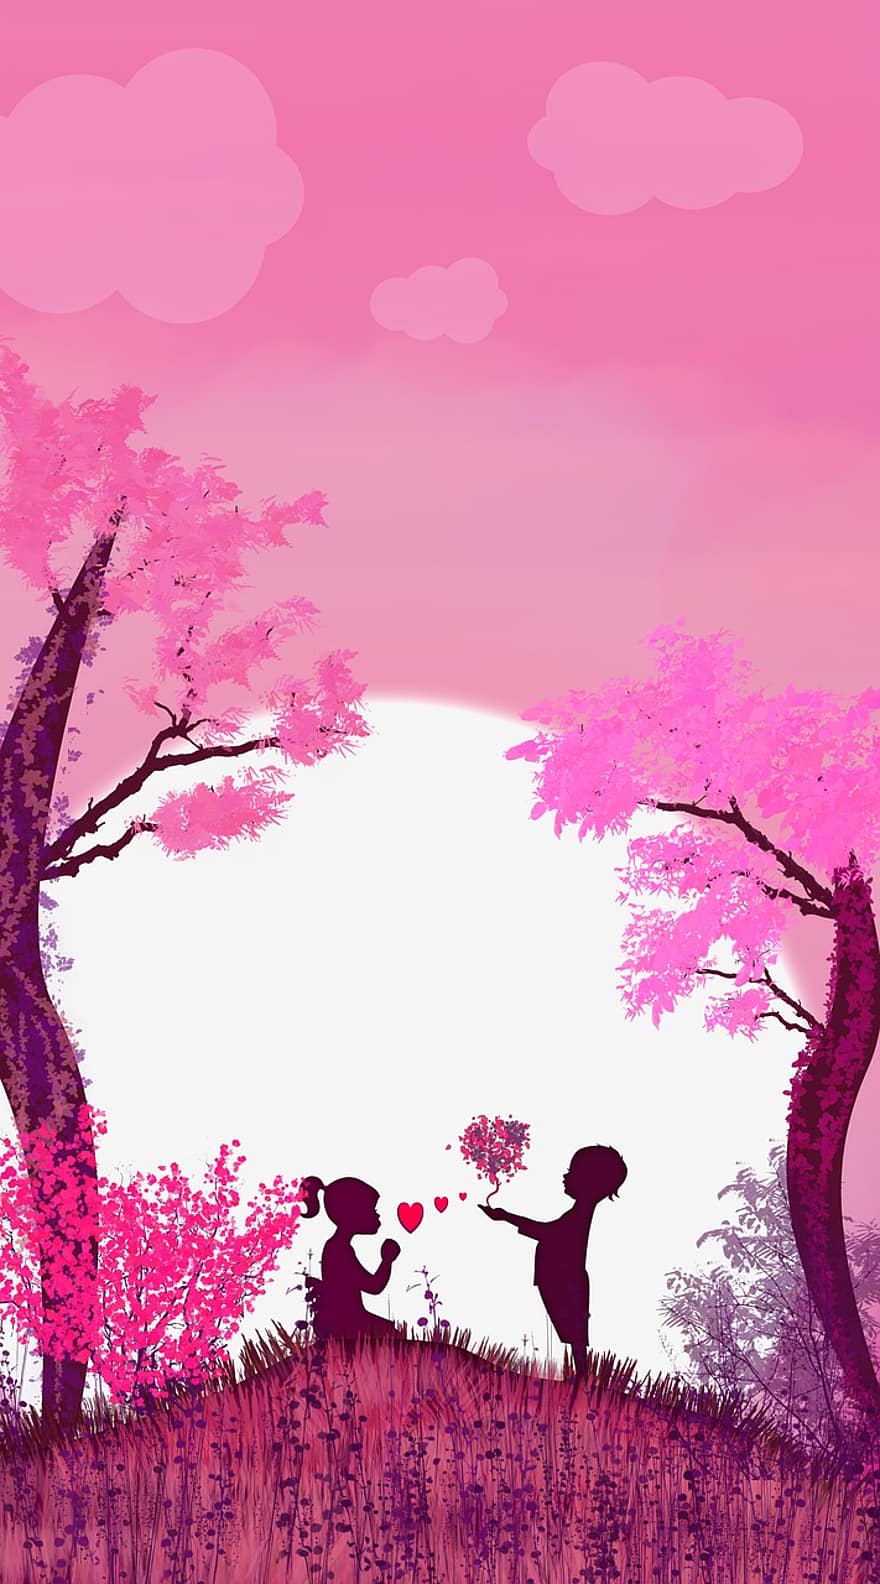 Love, Couple, Pink Background, Romance, tree, vector, illustration, sunset, landscape, backgrounds, silhouette